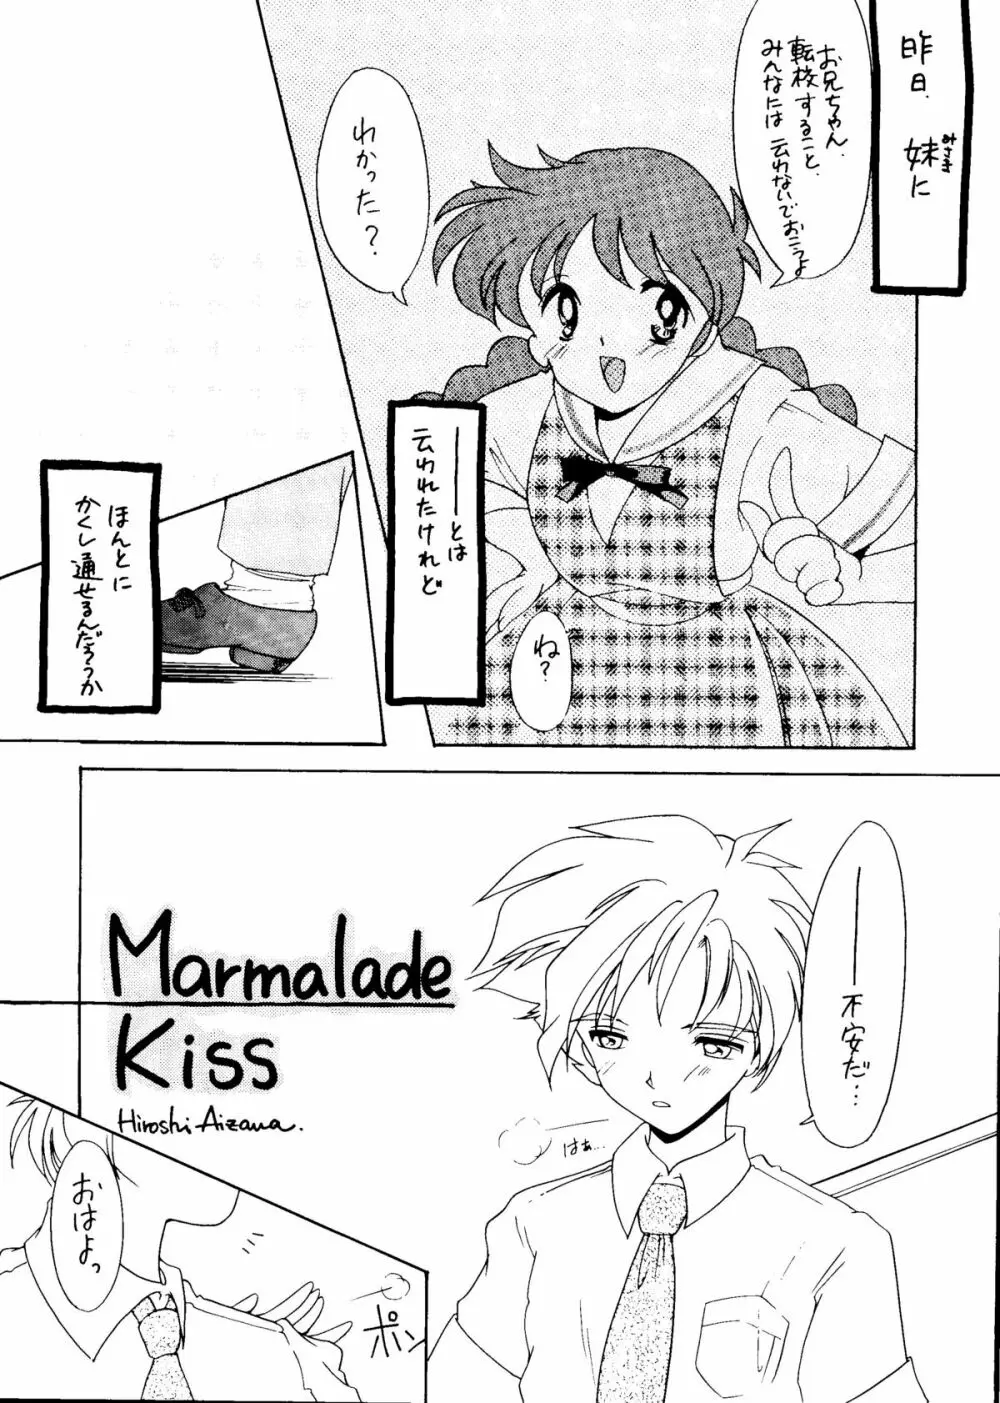 MARMALADE KISS - page11